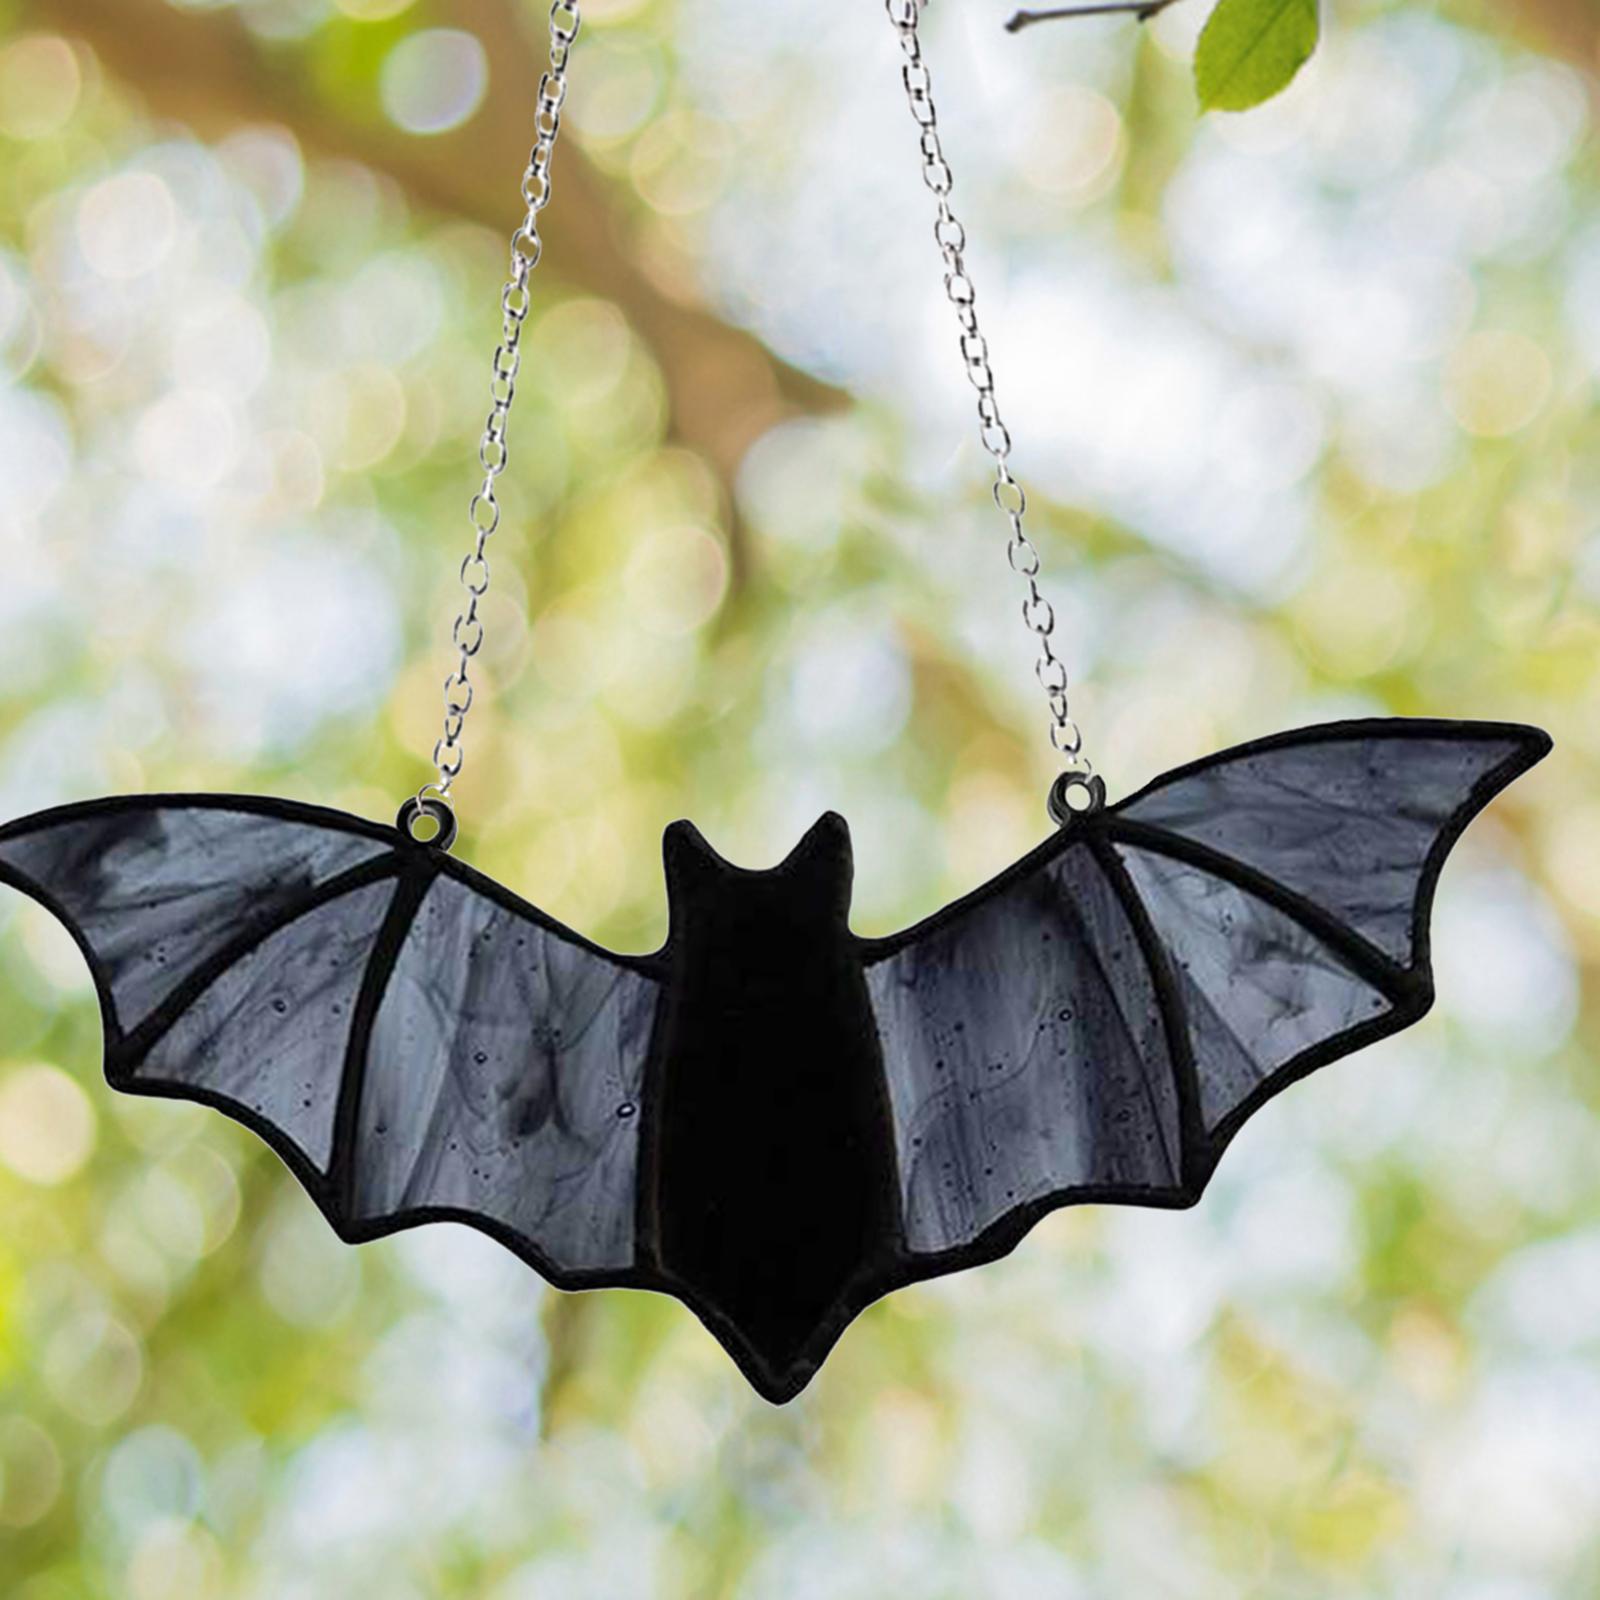 Hanging Bat Decoration Hanging Ornament Pendant for Garden Patio Home Decor 12cmx6.5cm Black